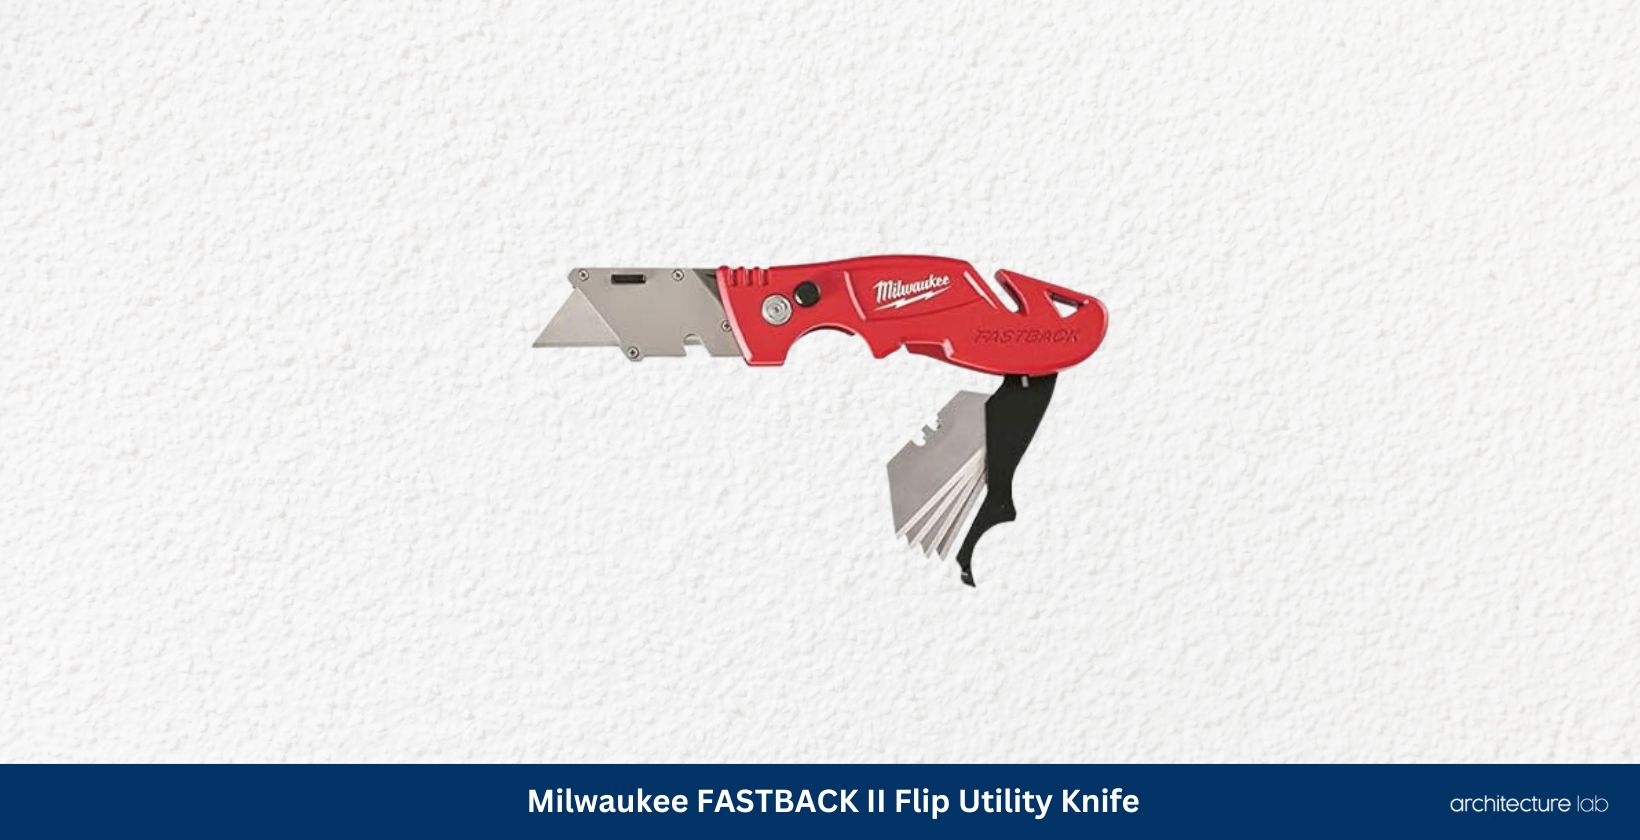 Milwaukee fastback ii flip utility knife